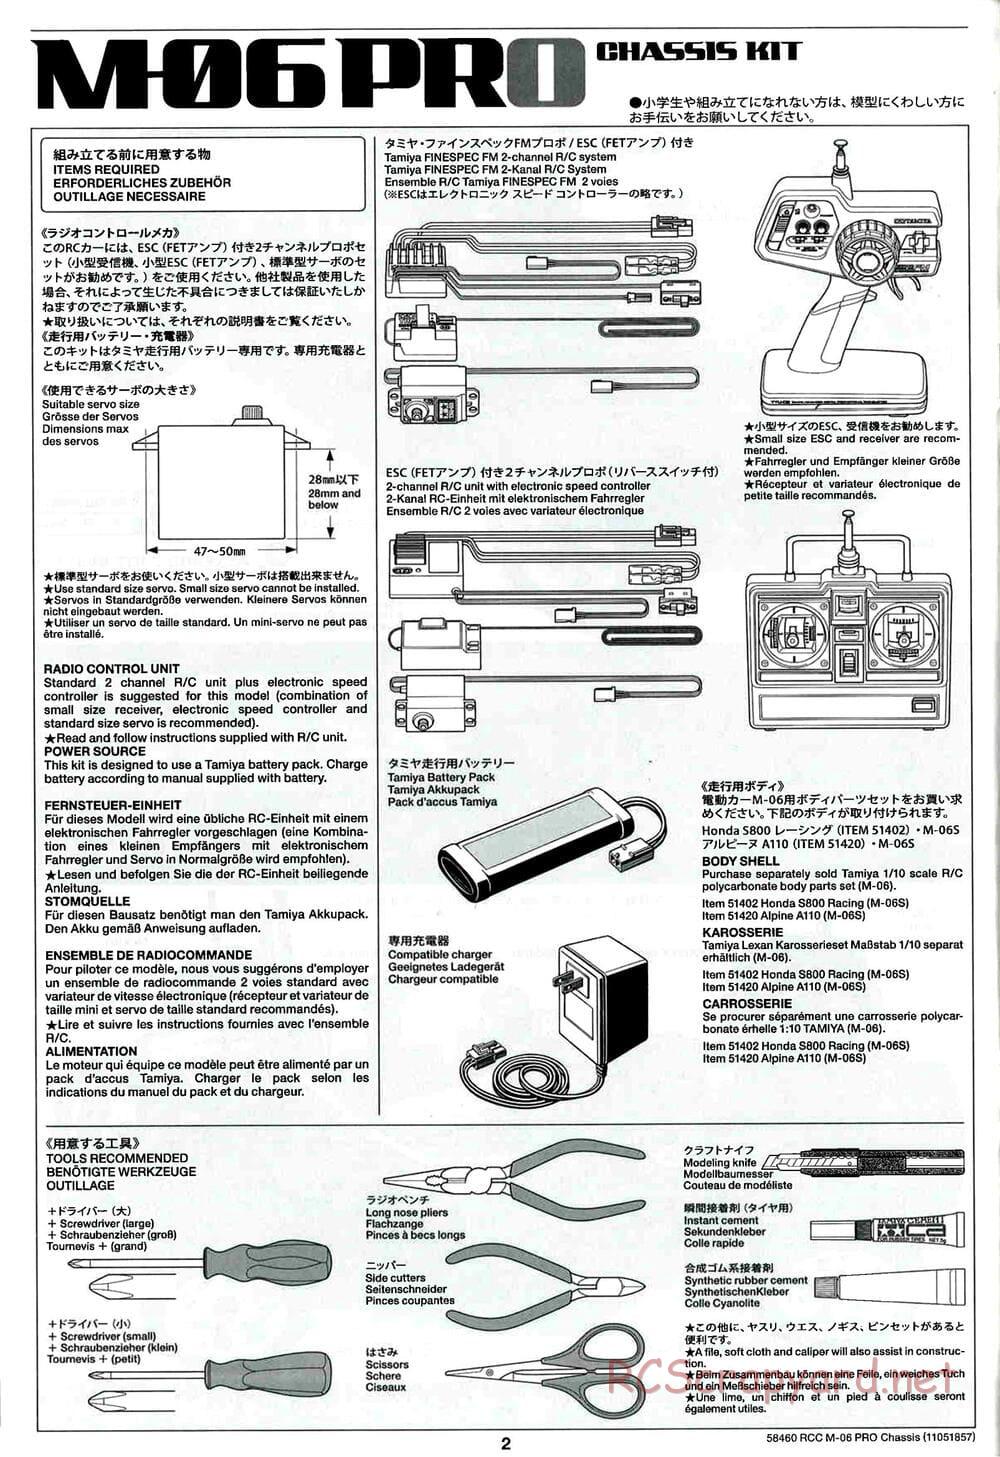 Tamiya - M-06 Pro Chassis - Manual - Page 2